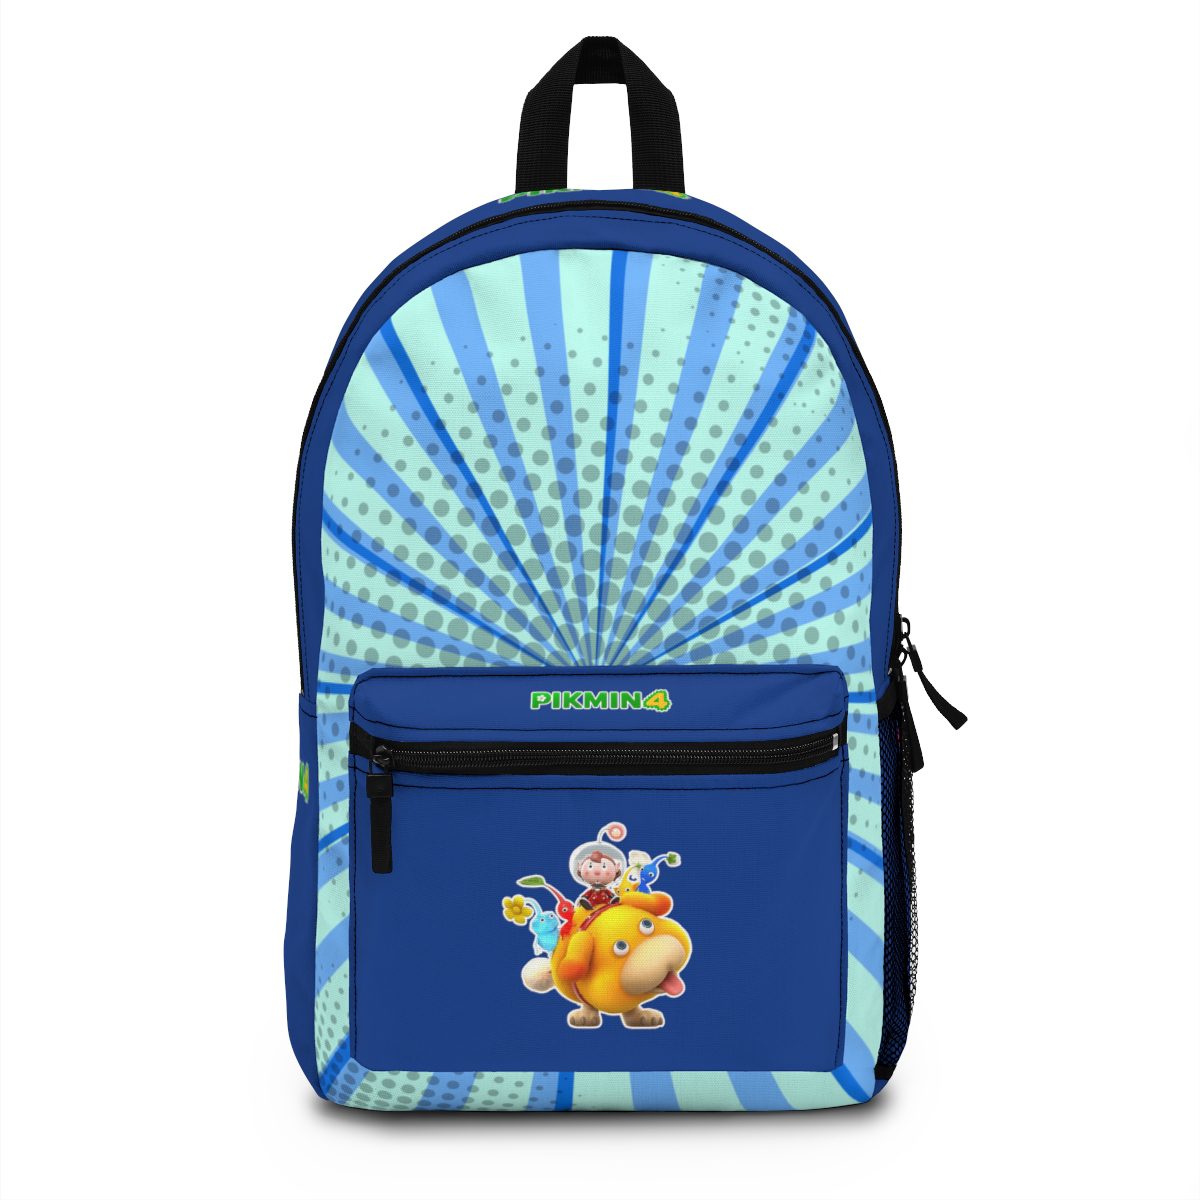 PIKMIN 4 Video Game Blue Backpack Cool Kiddo 10